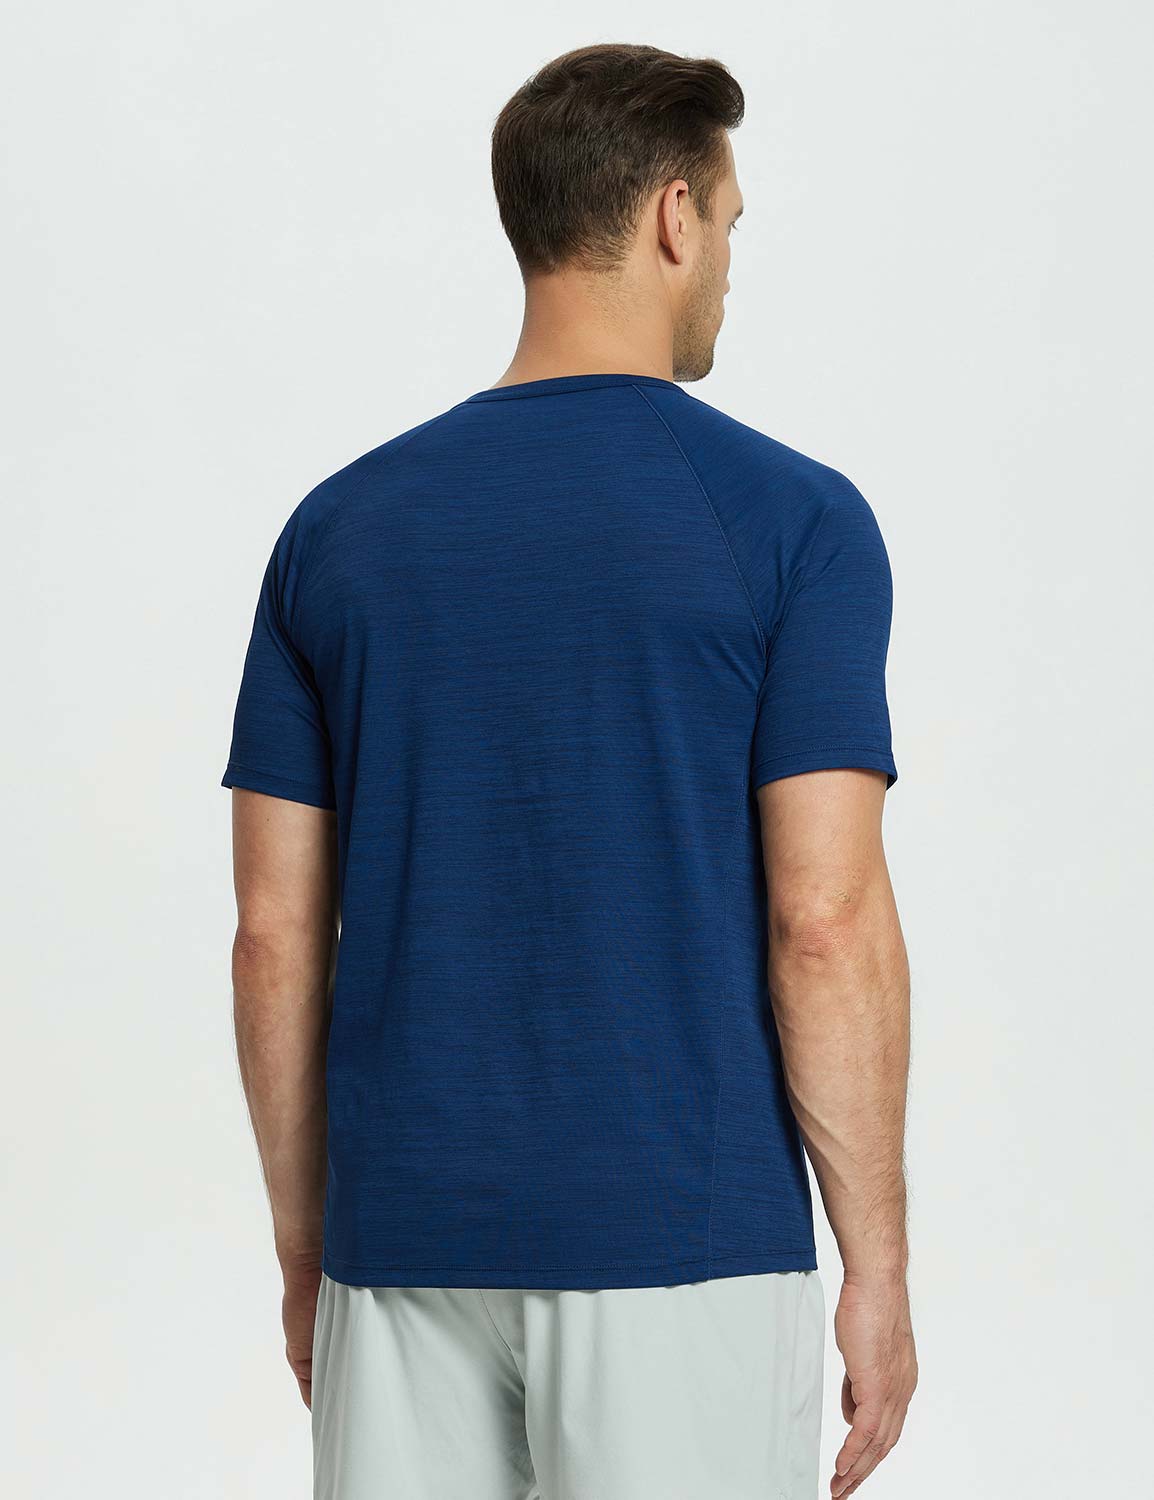 Baleaf Men's Short-Sleeve Henley T-Shirt (Website Exclusive) dbd067 Navy Peony Back